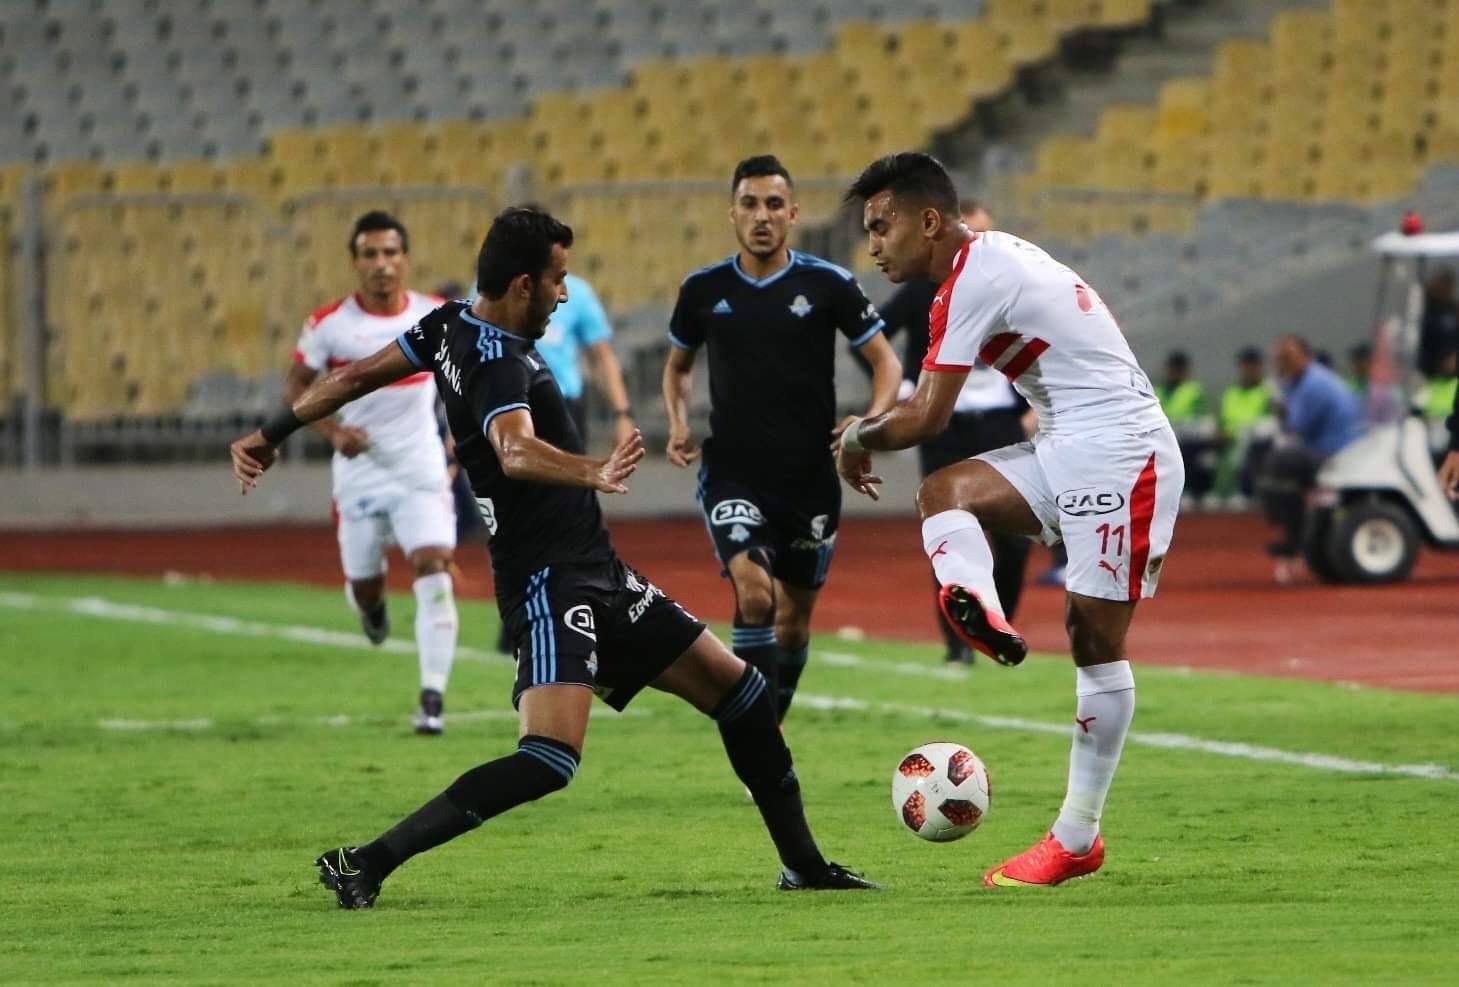 Egyptian soccer clubs make long-awaited return to training - Sports Leo